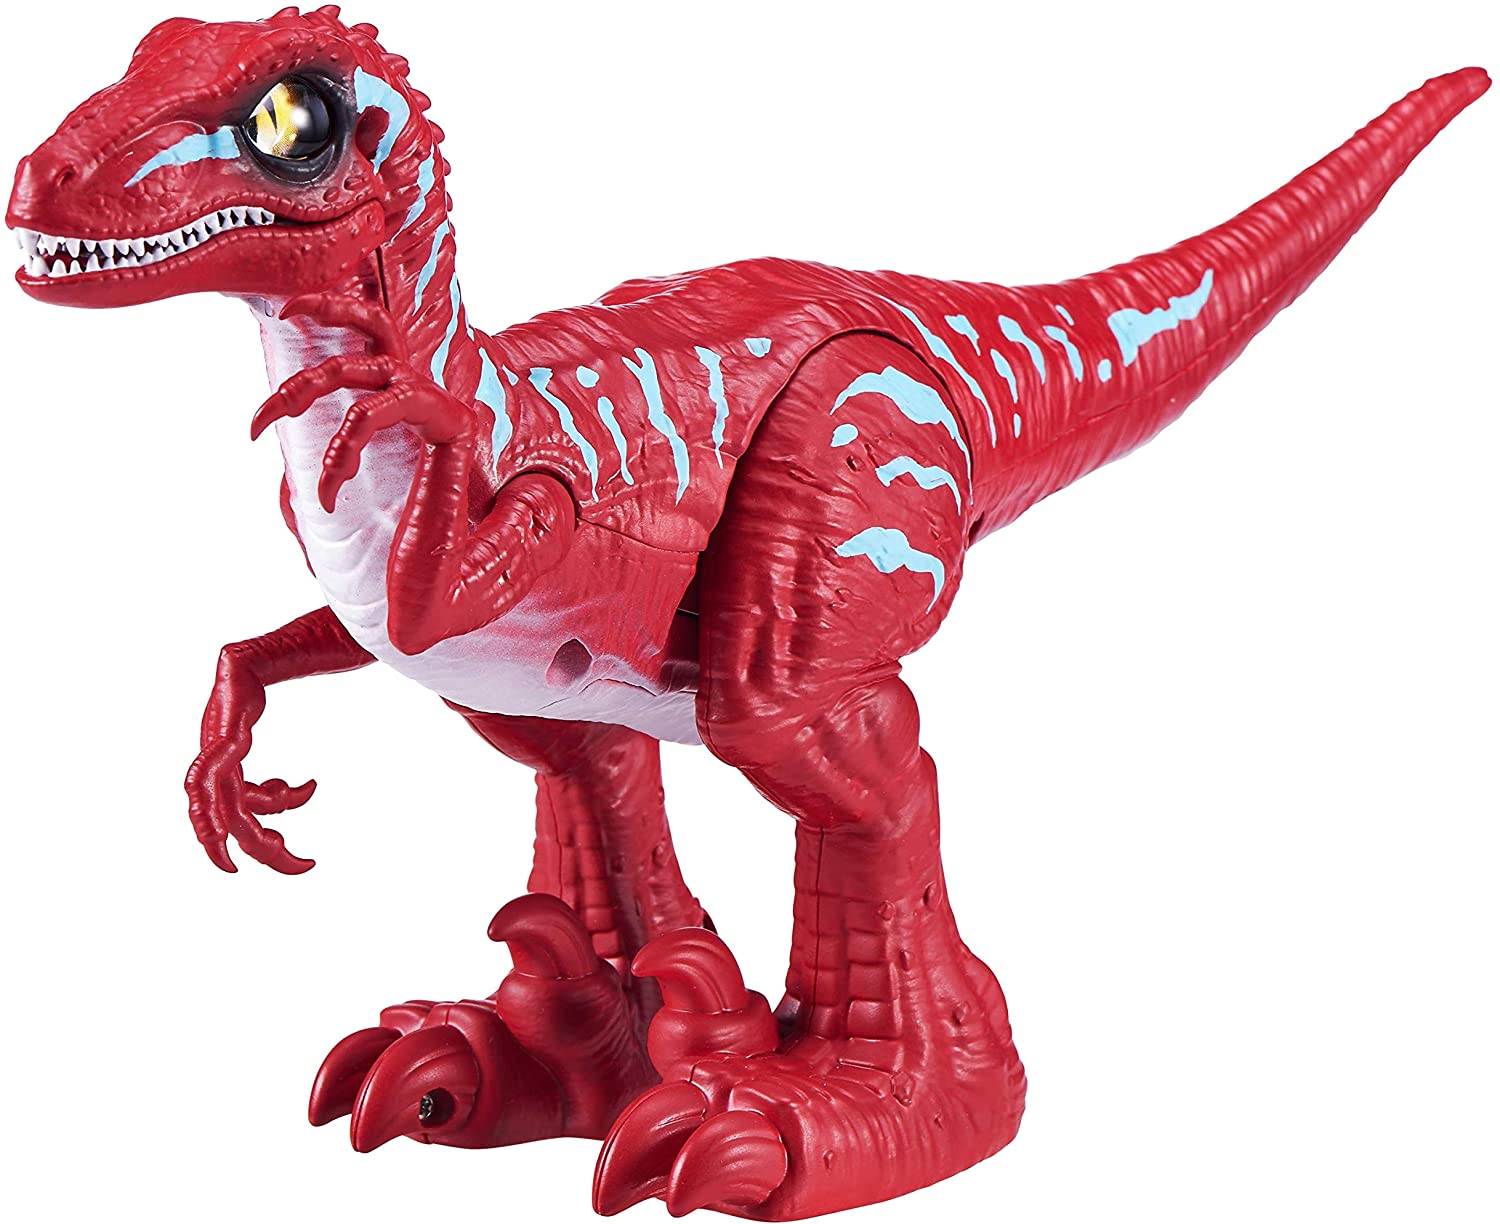 Robo Alive 25289A Rampaging Raptor Dinosaur Toy By Zuru (Red)